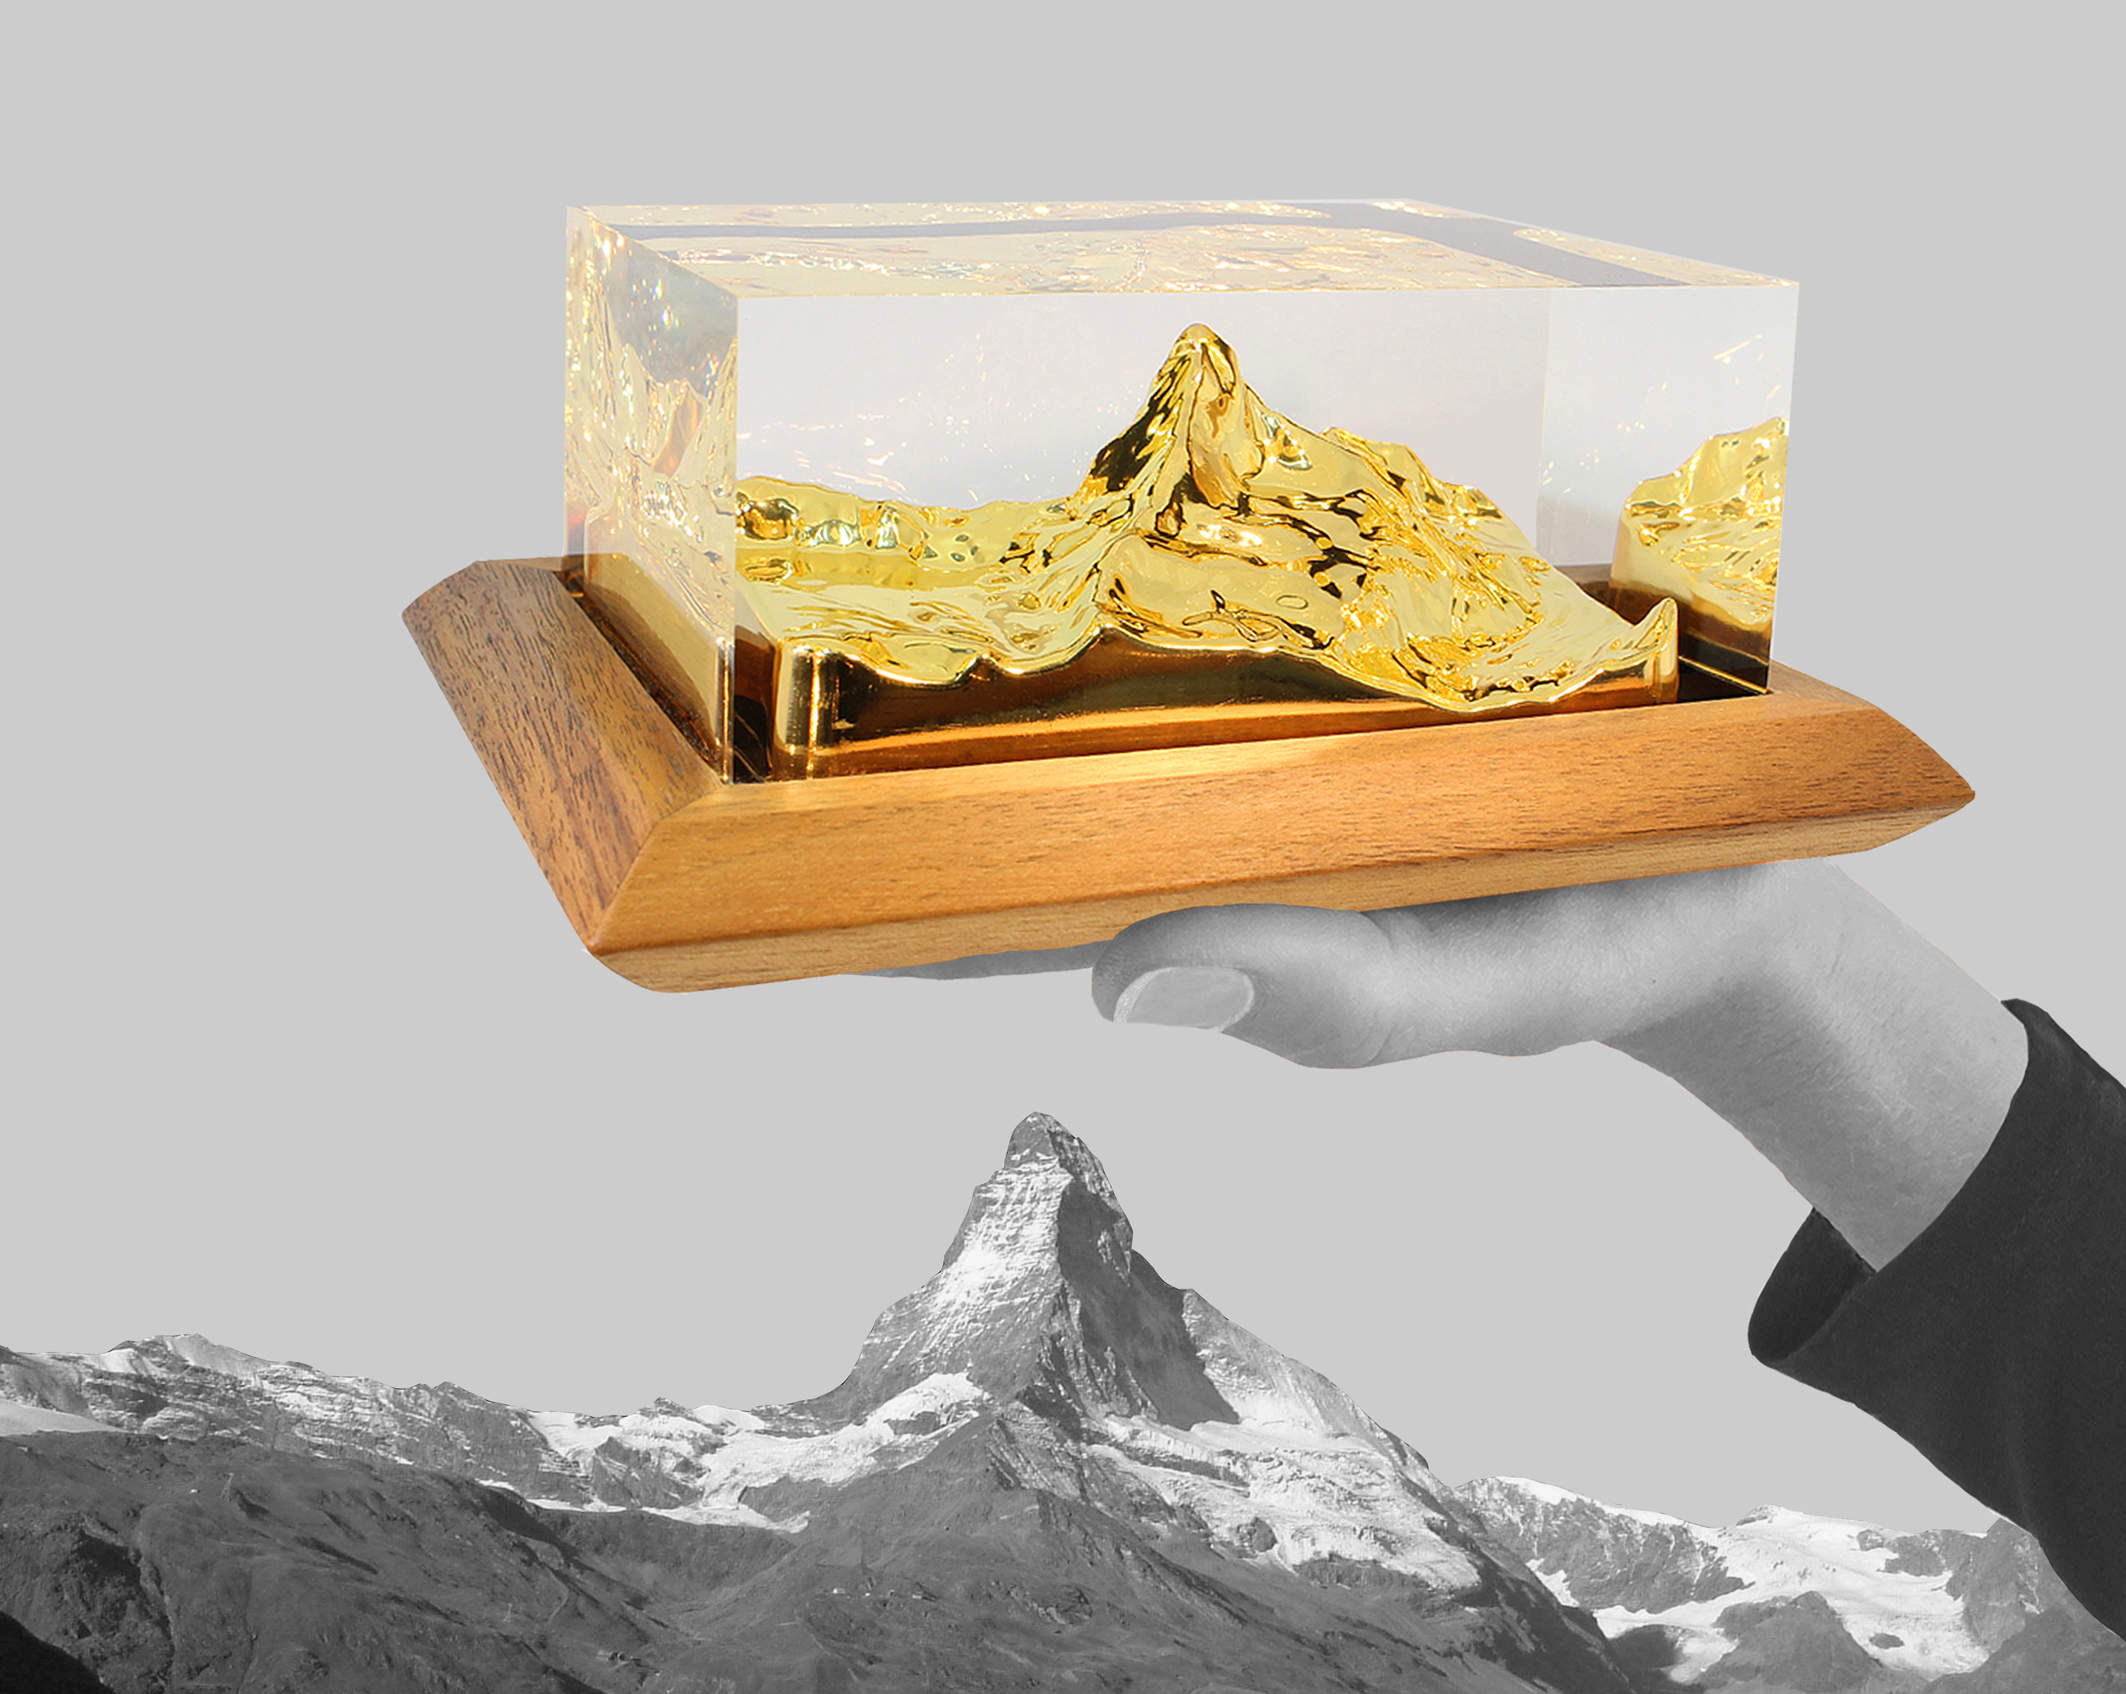 24 Karat vergoldetes Matterhorn Modell auf Nussbaumsockel.  SMARKS® M2, maxi.